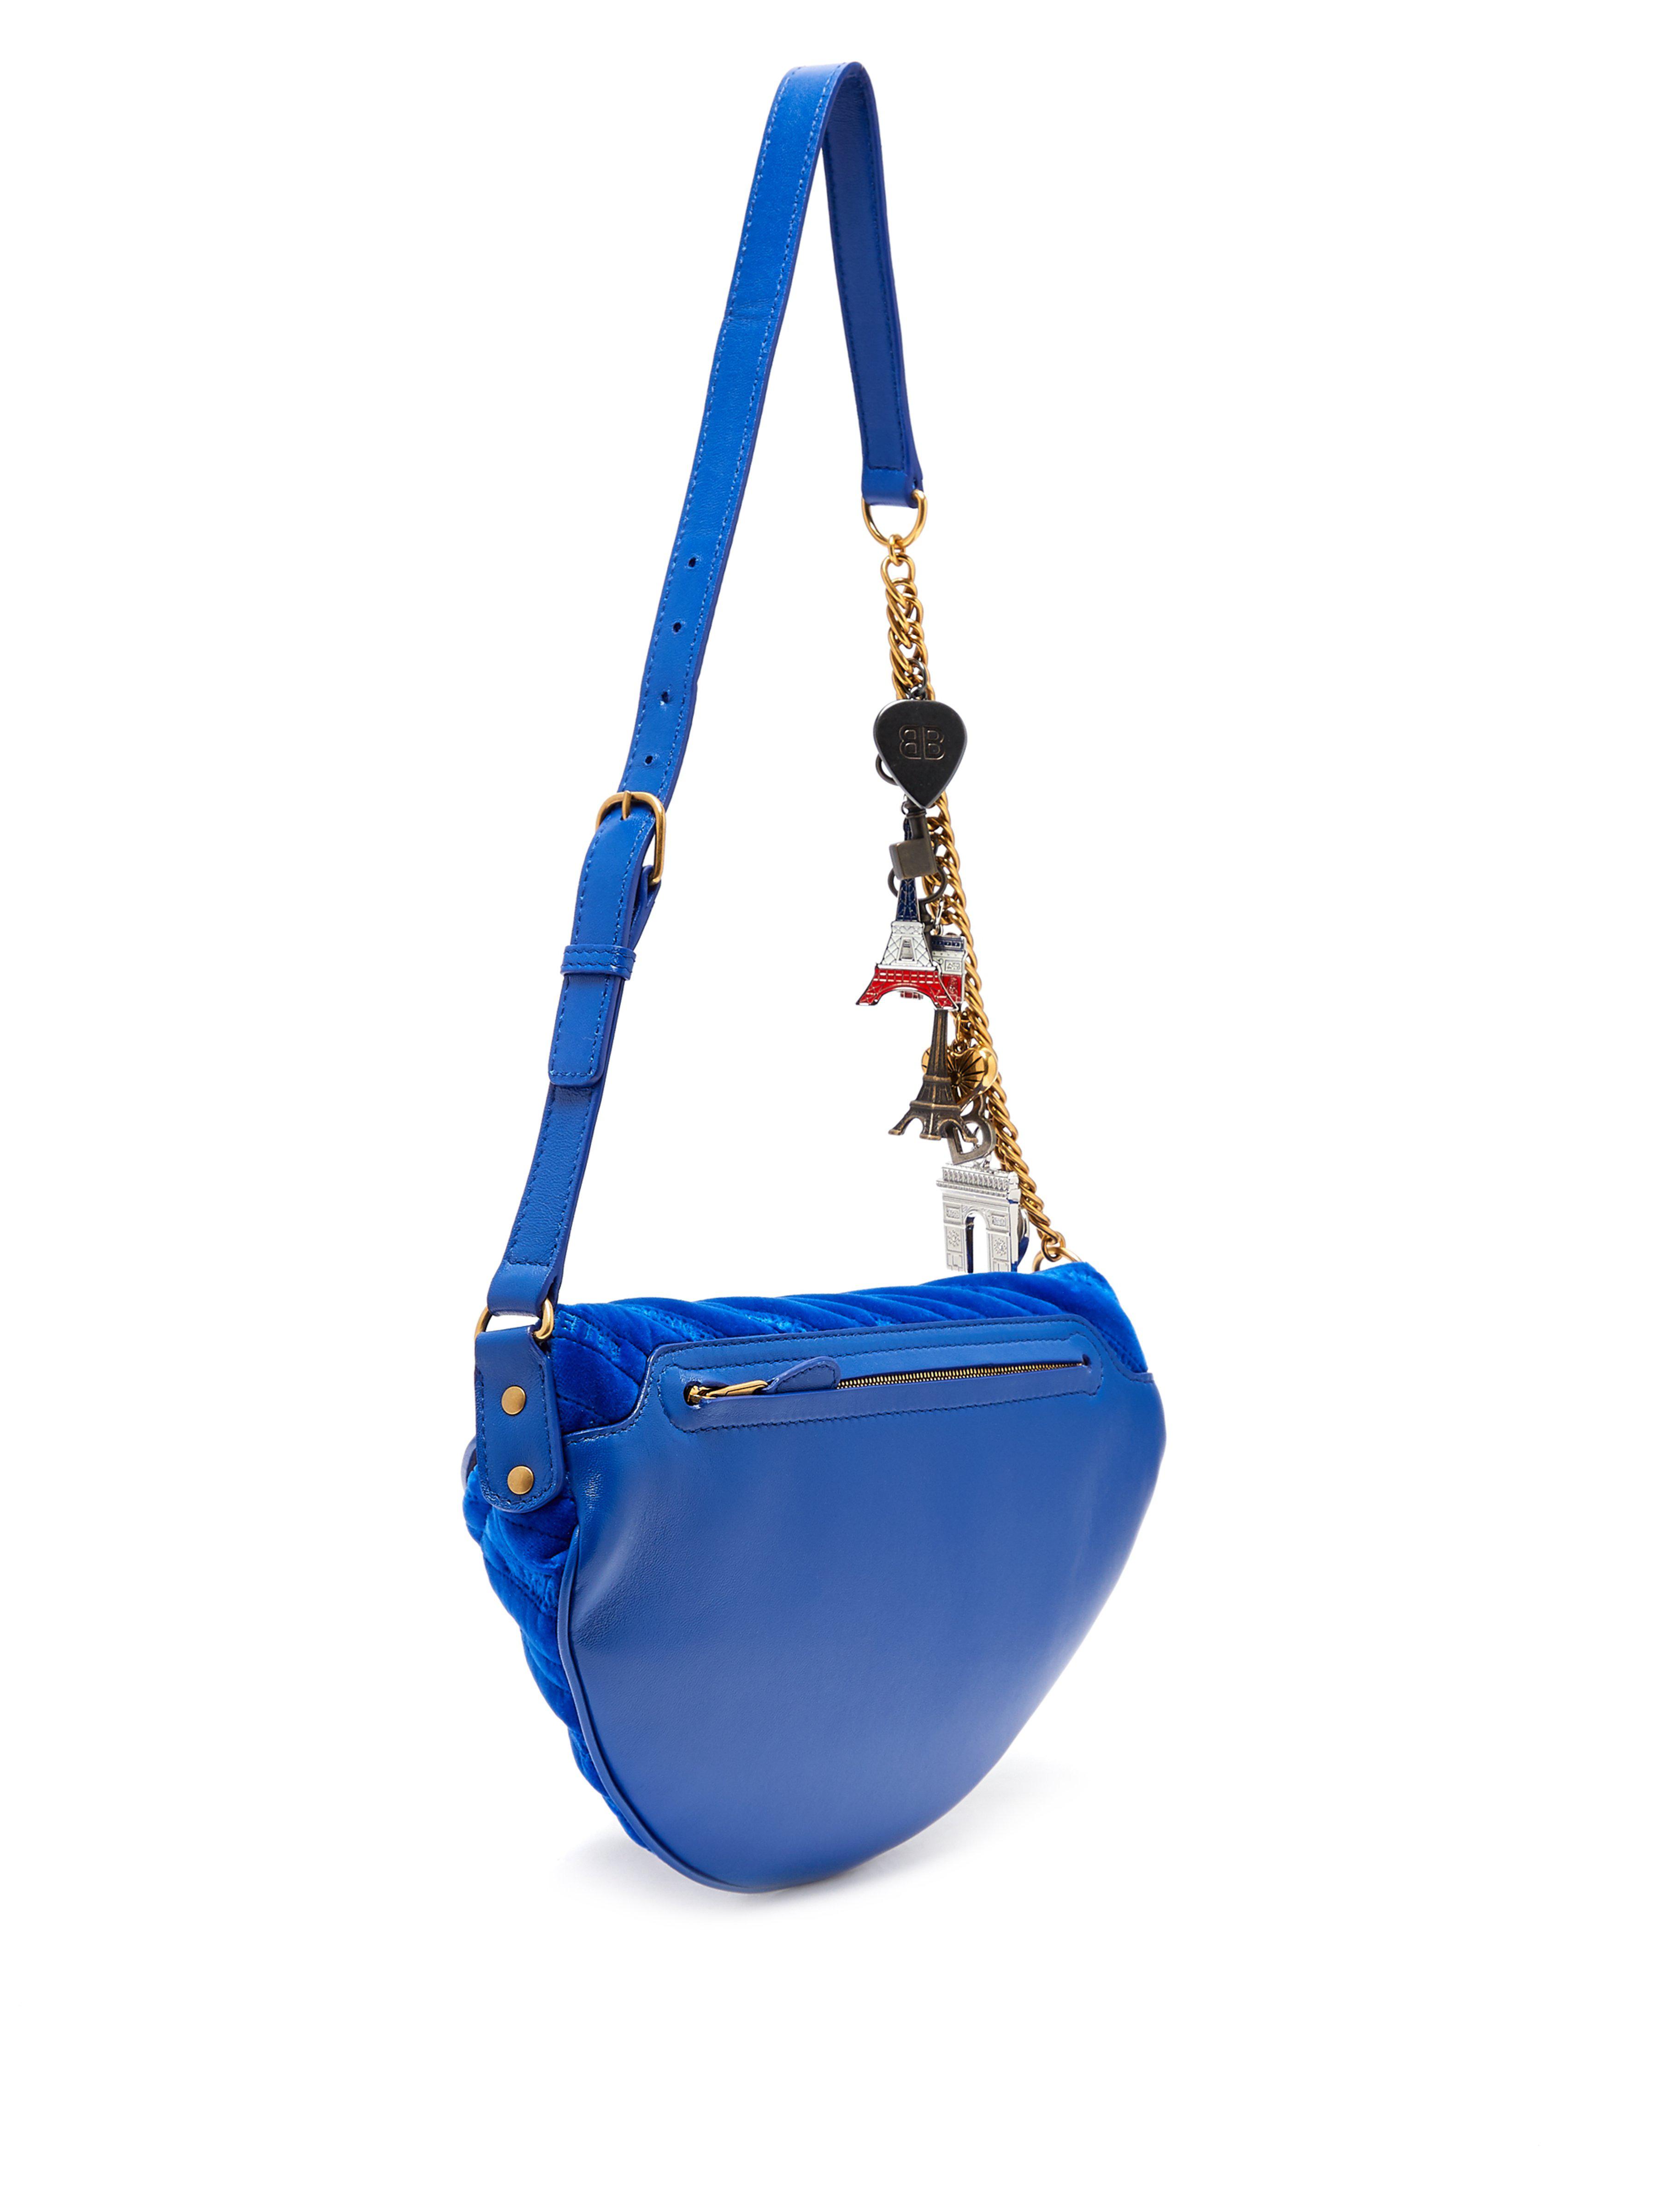 Balenciaga Souvenir Velvet Belt Bag in Blue - Lyst